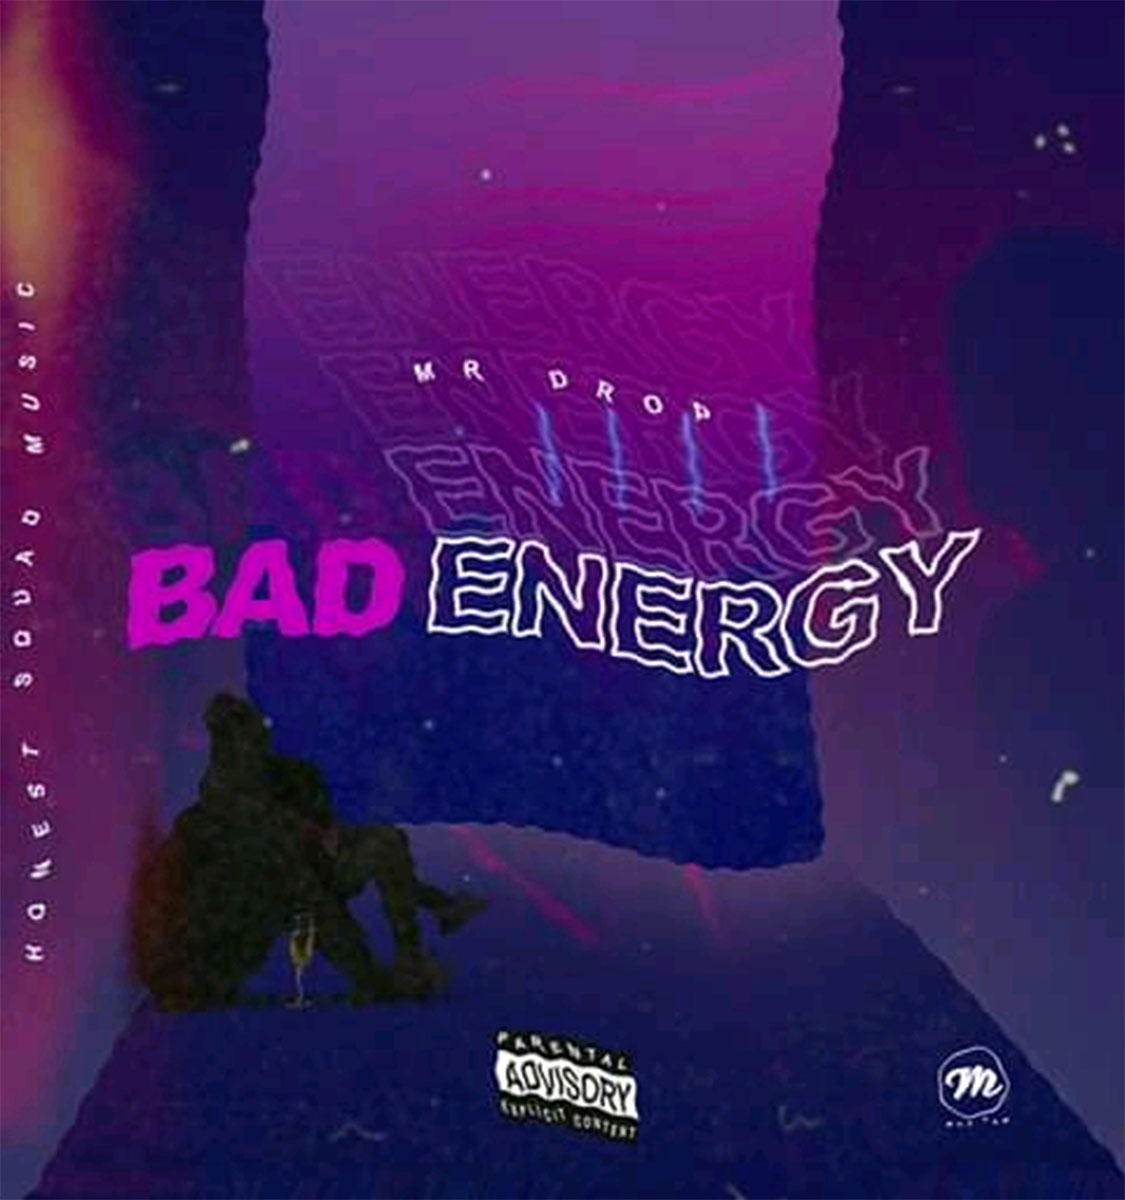 Mr Drop - Bad Energy